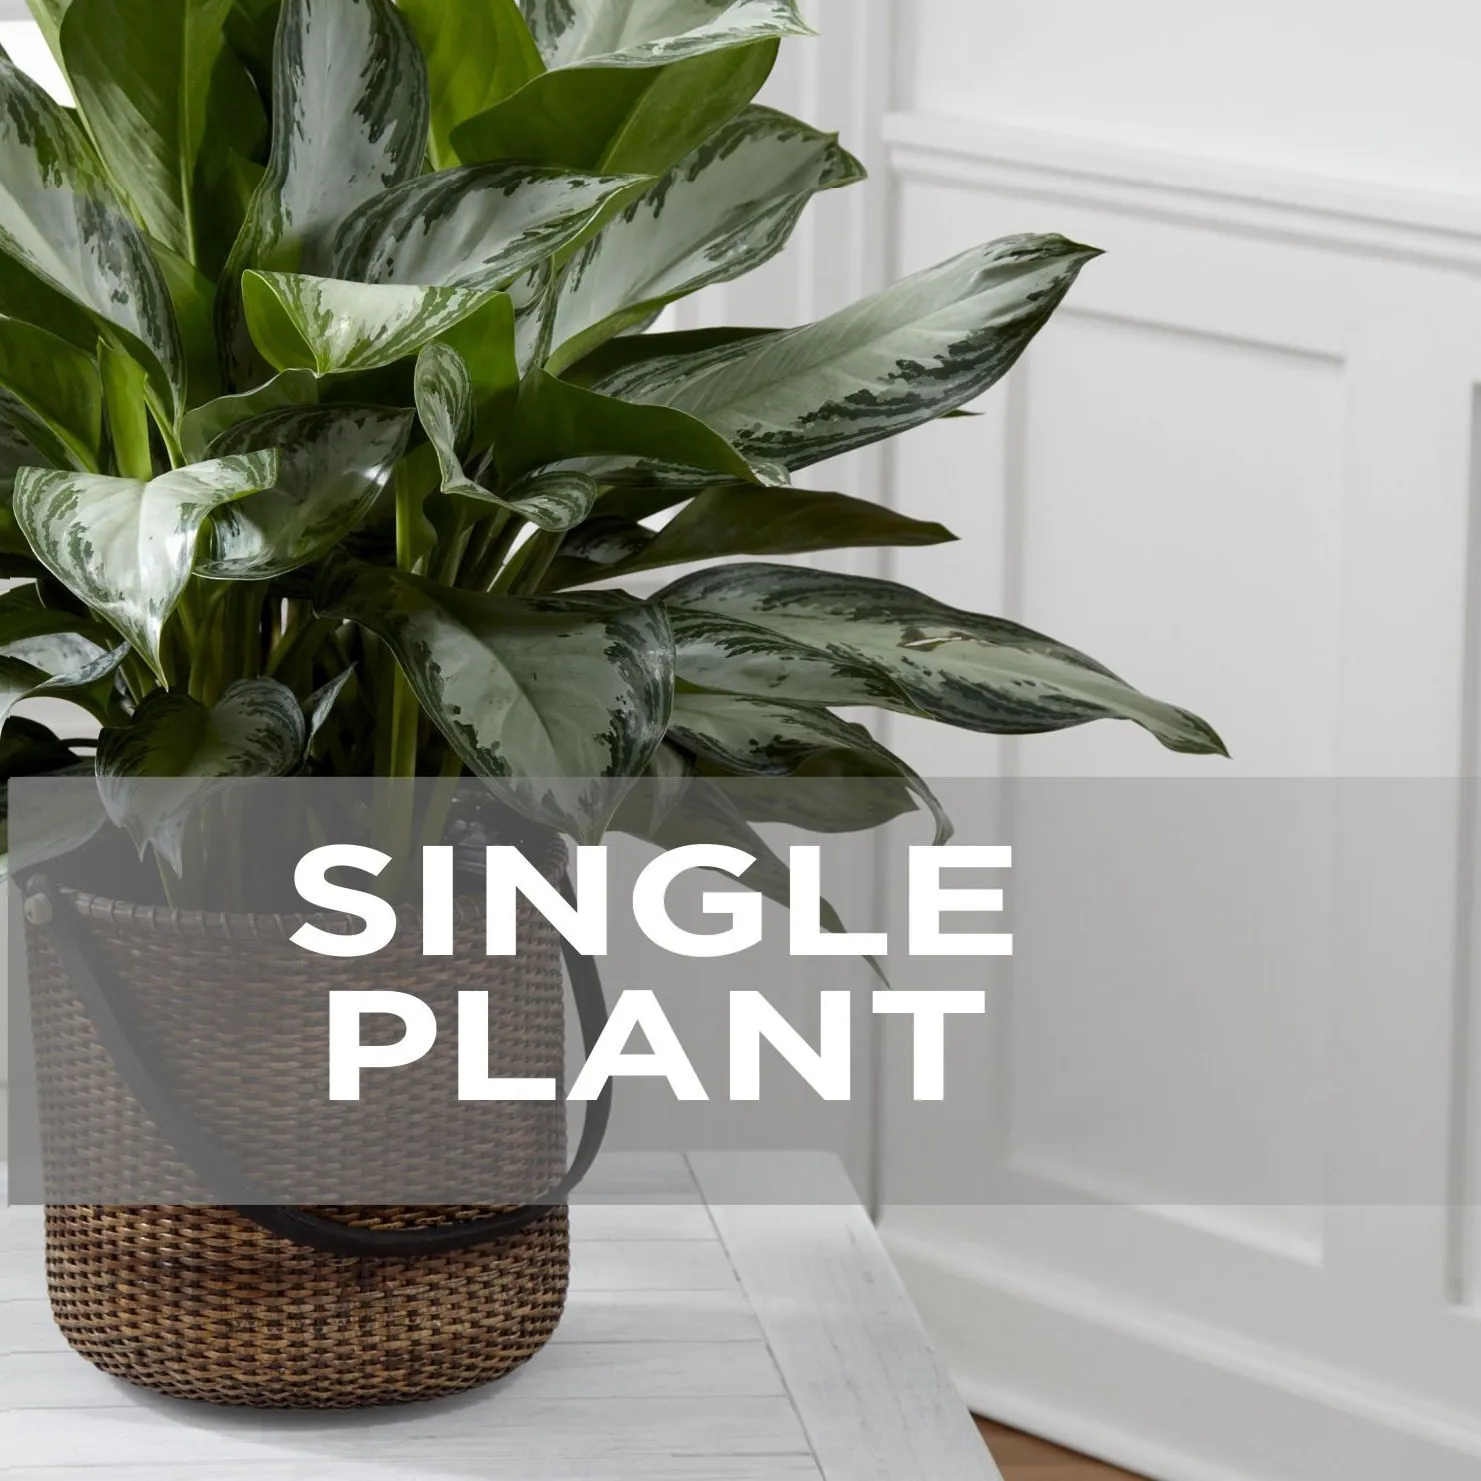 Single Plant - United States